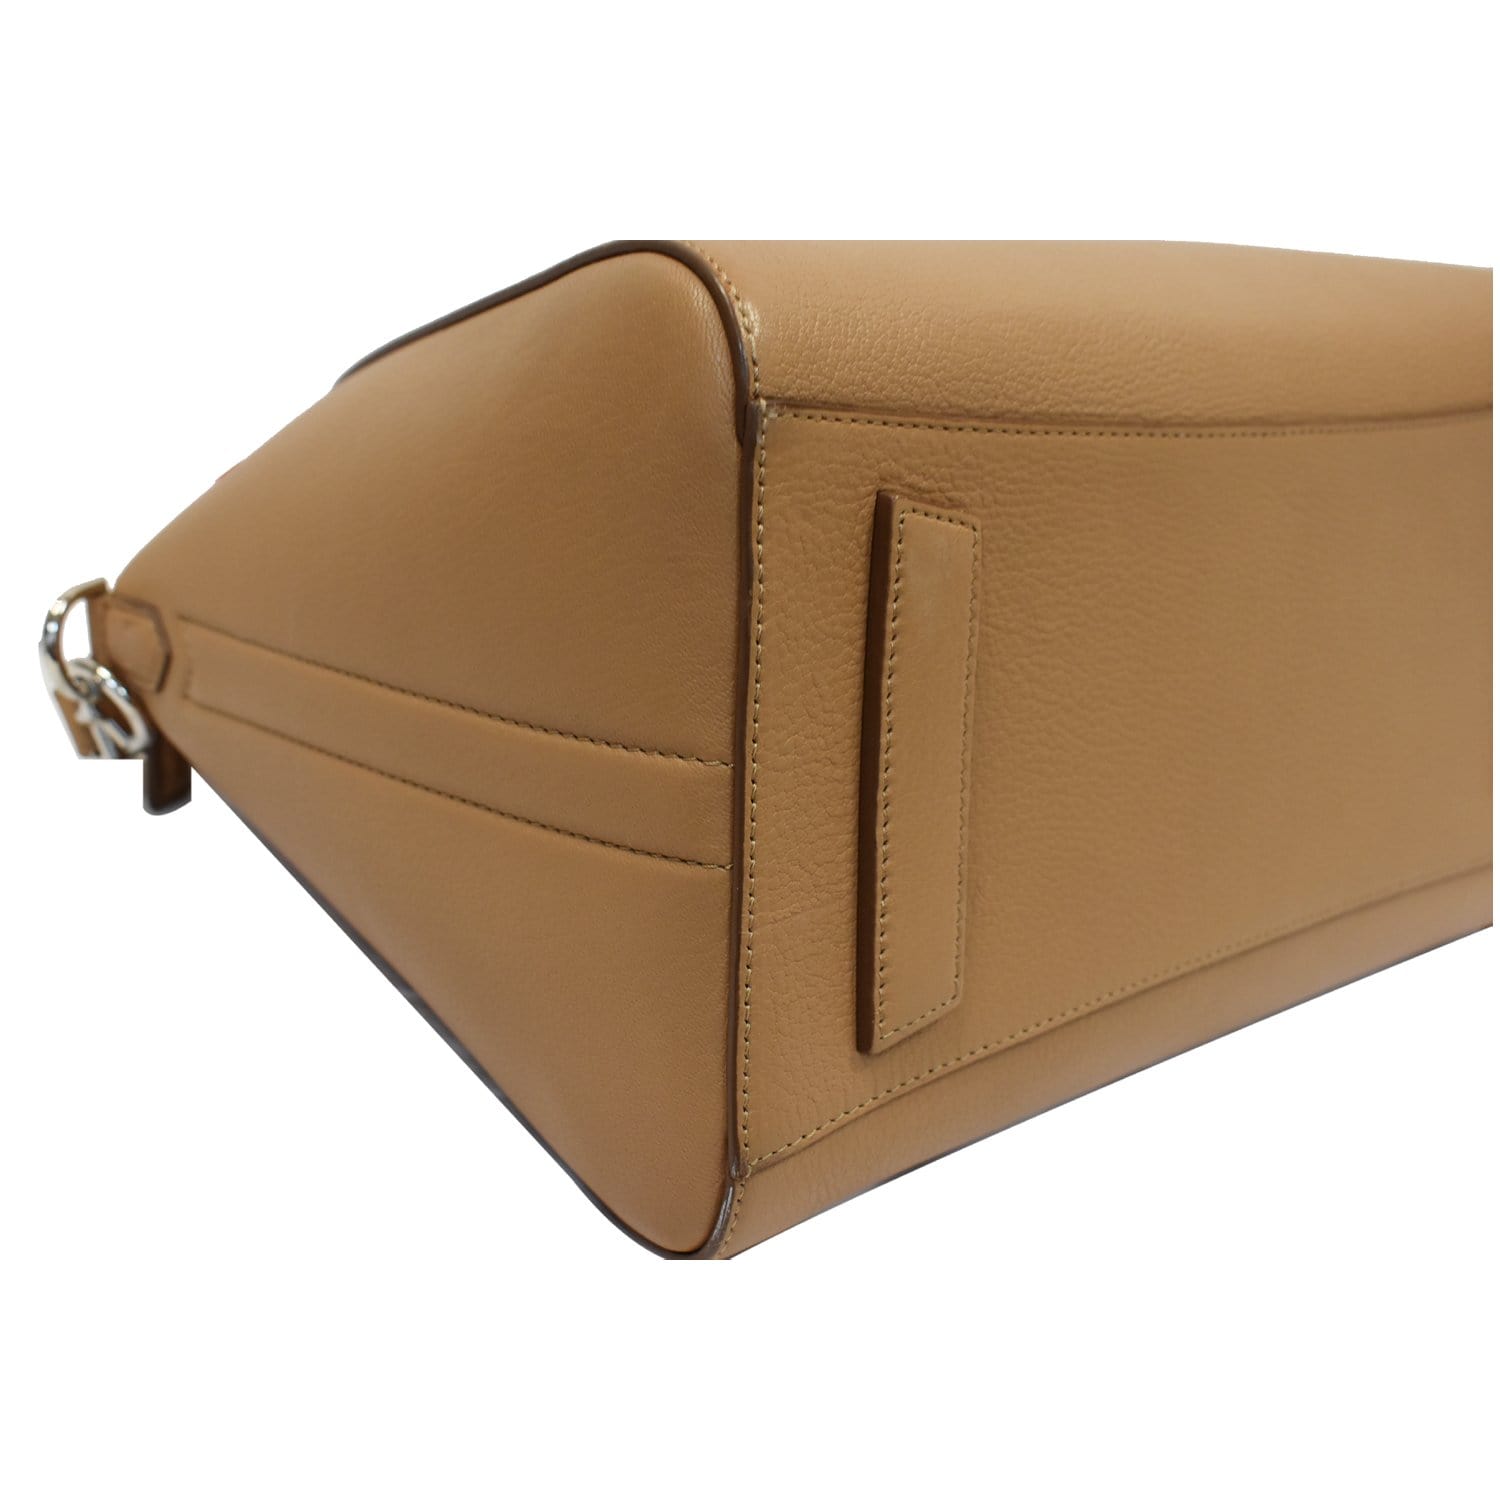 Givenchy Antigona Beige Authentic Leather Satchel Bag